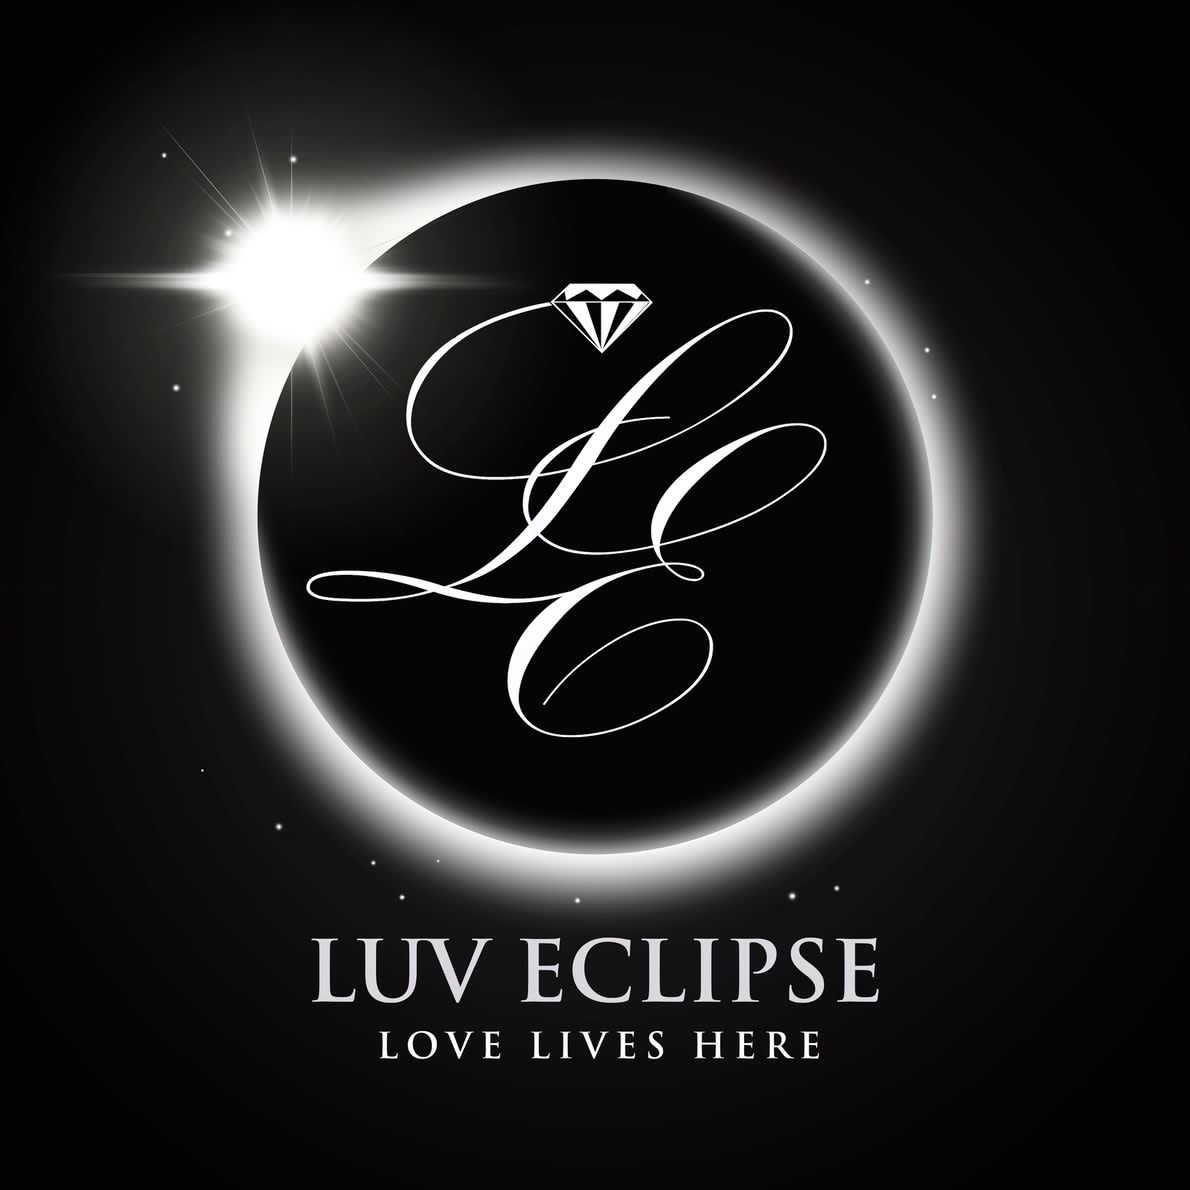 Luv Eclipse logo